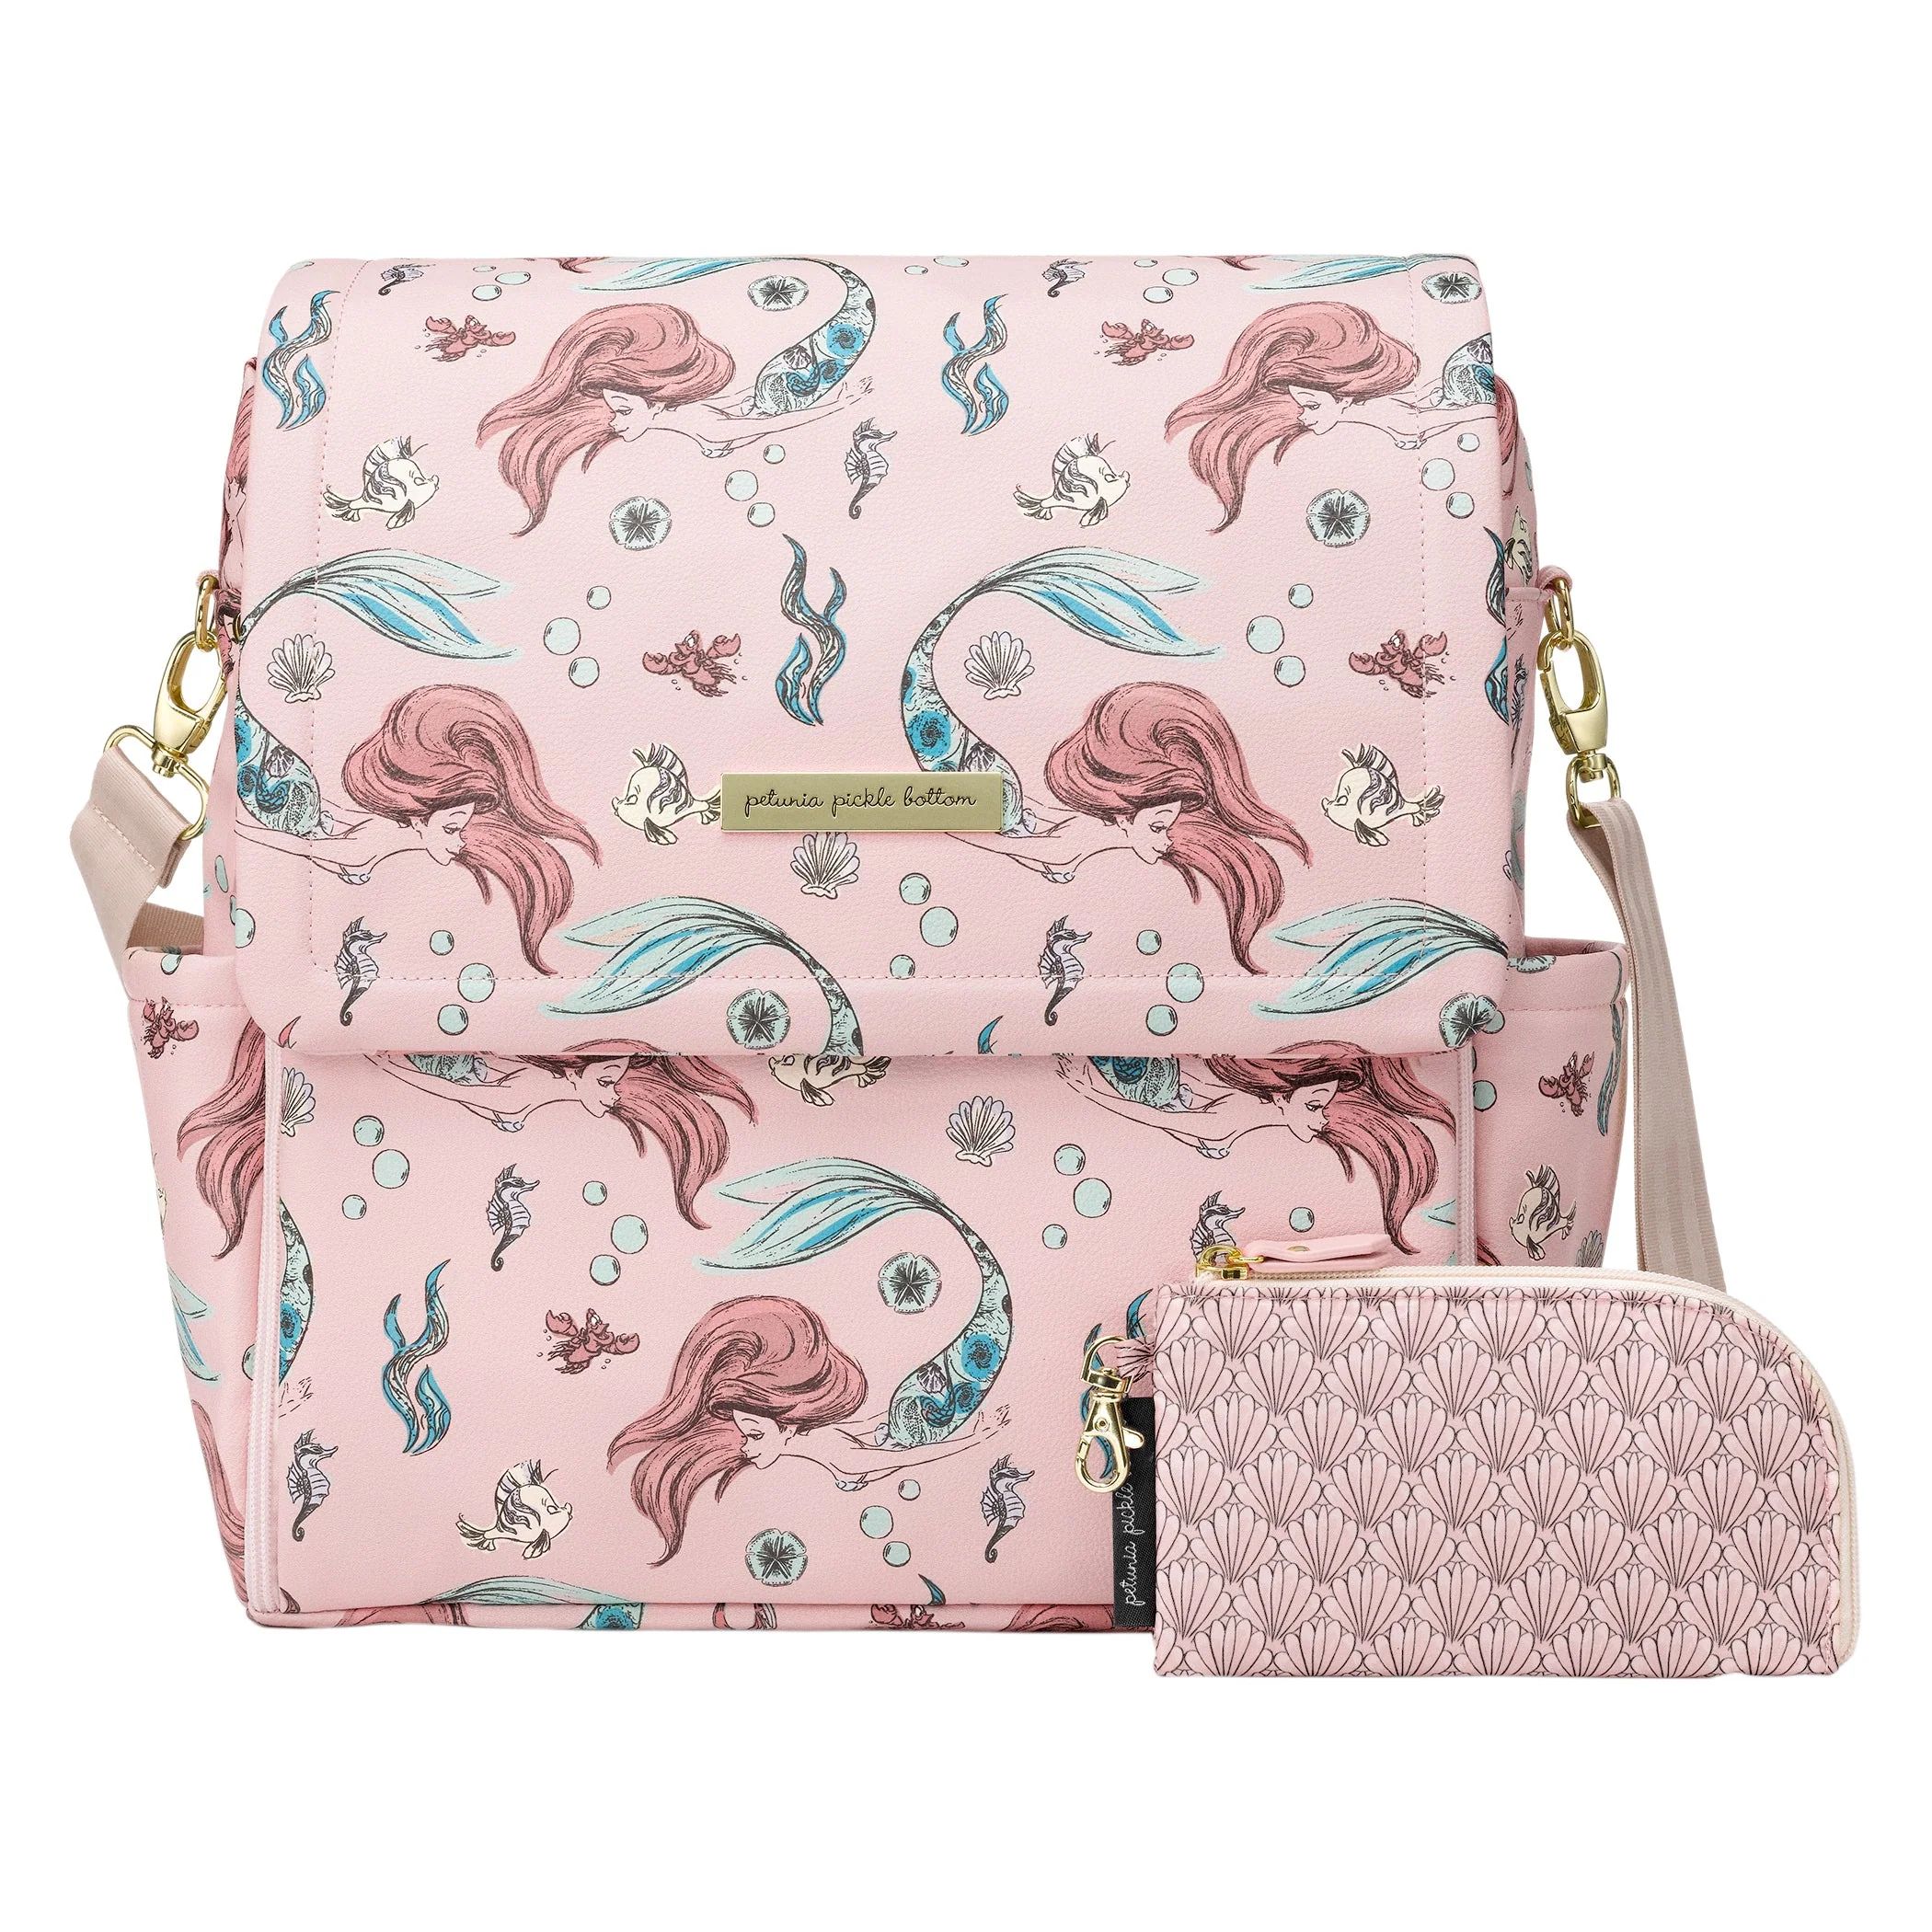 Boxy Backpack Diaper Bag in Disney's Little Mermaid | Petunia Pickle Bottom